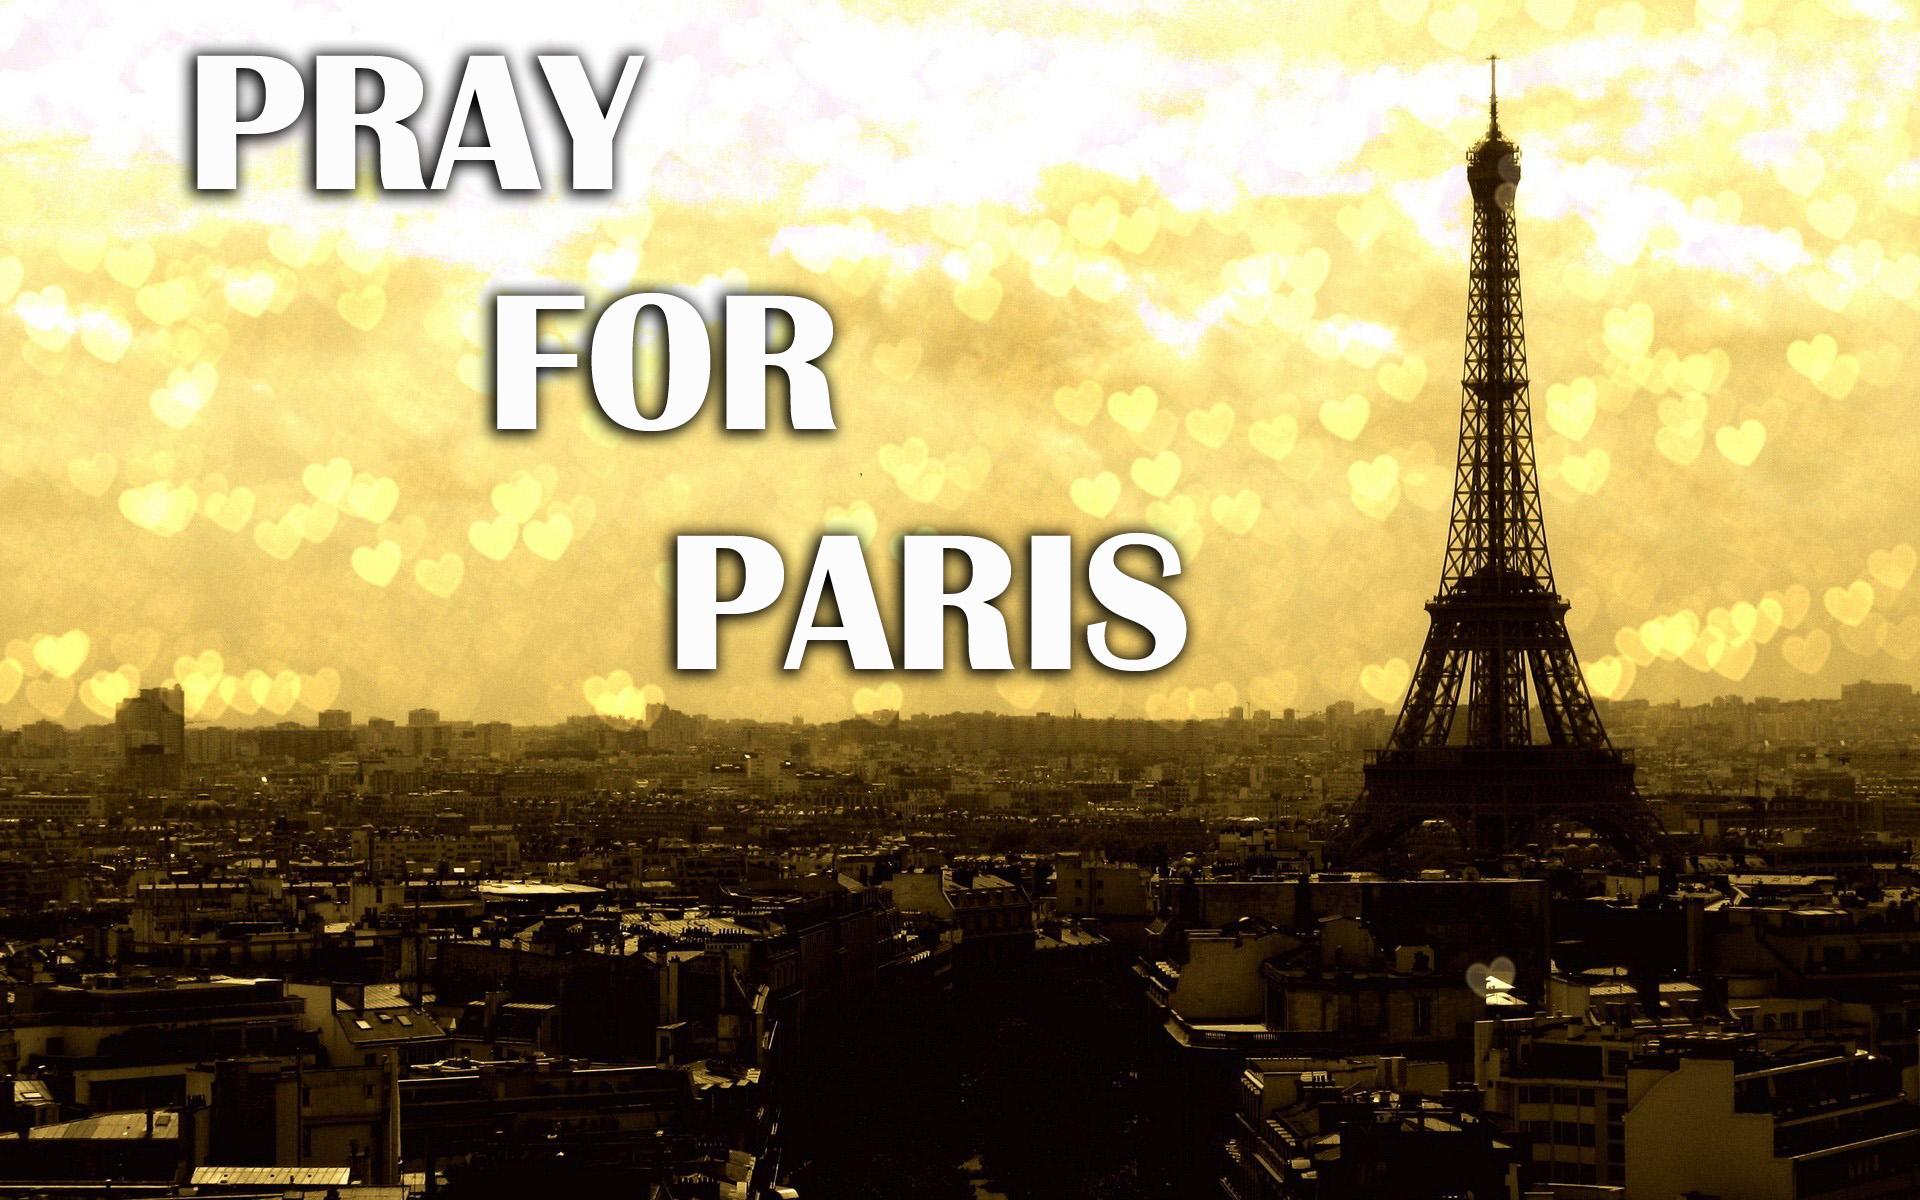 HD wallpaper France Paris terrorism Pray for Paris text night  communication  Wallpaper Flare